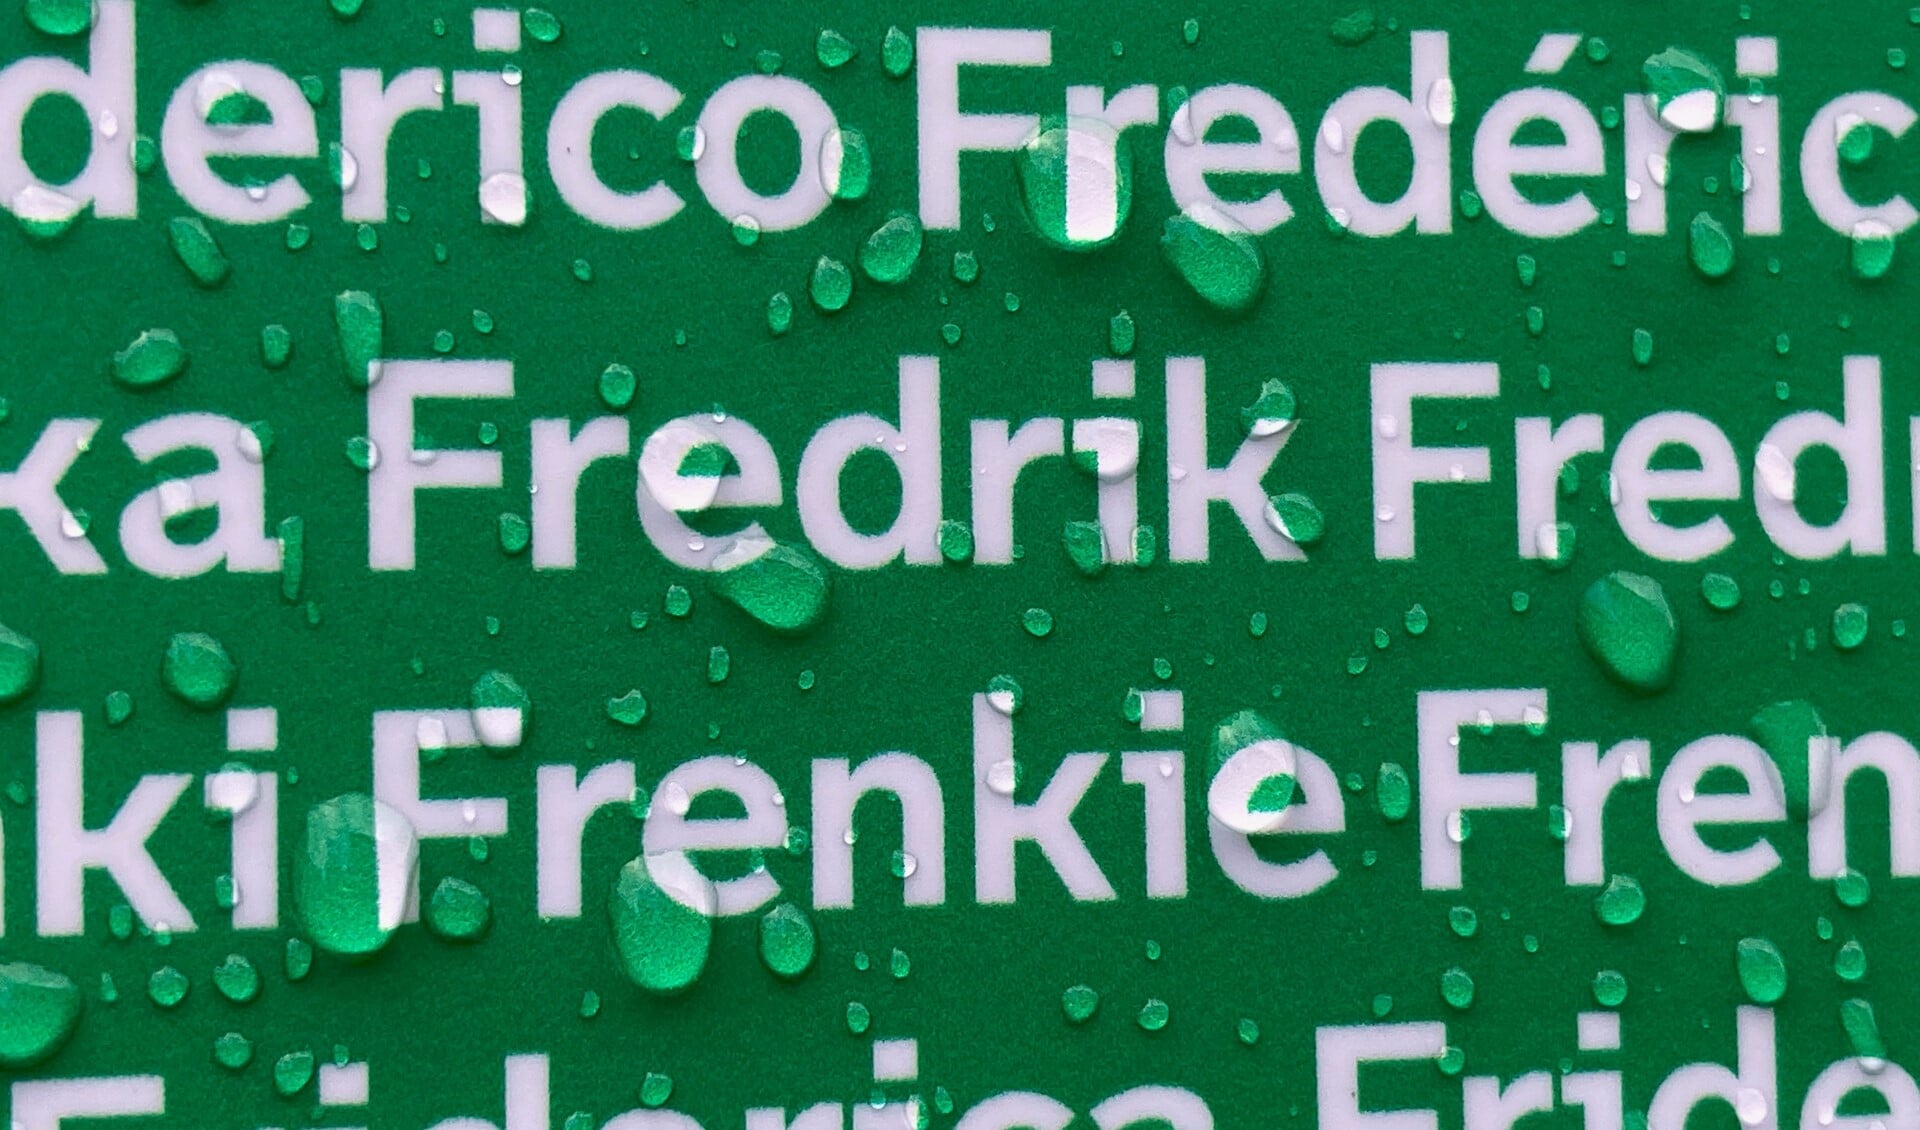 De volledige eerste voornaam van Fred Marree is Fredrik.